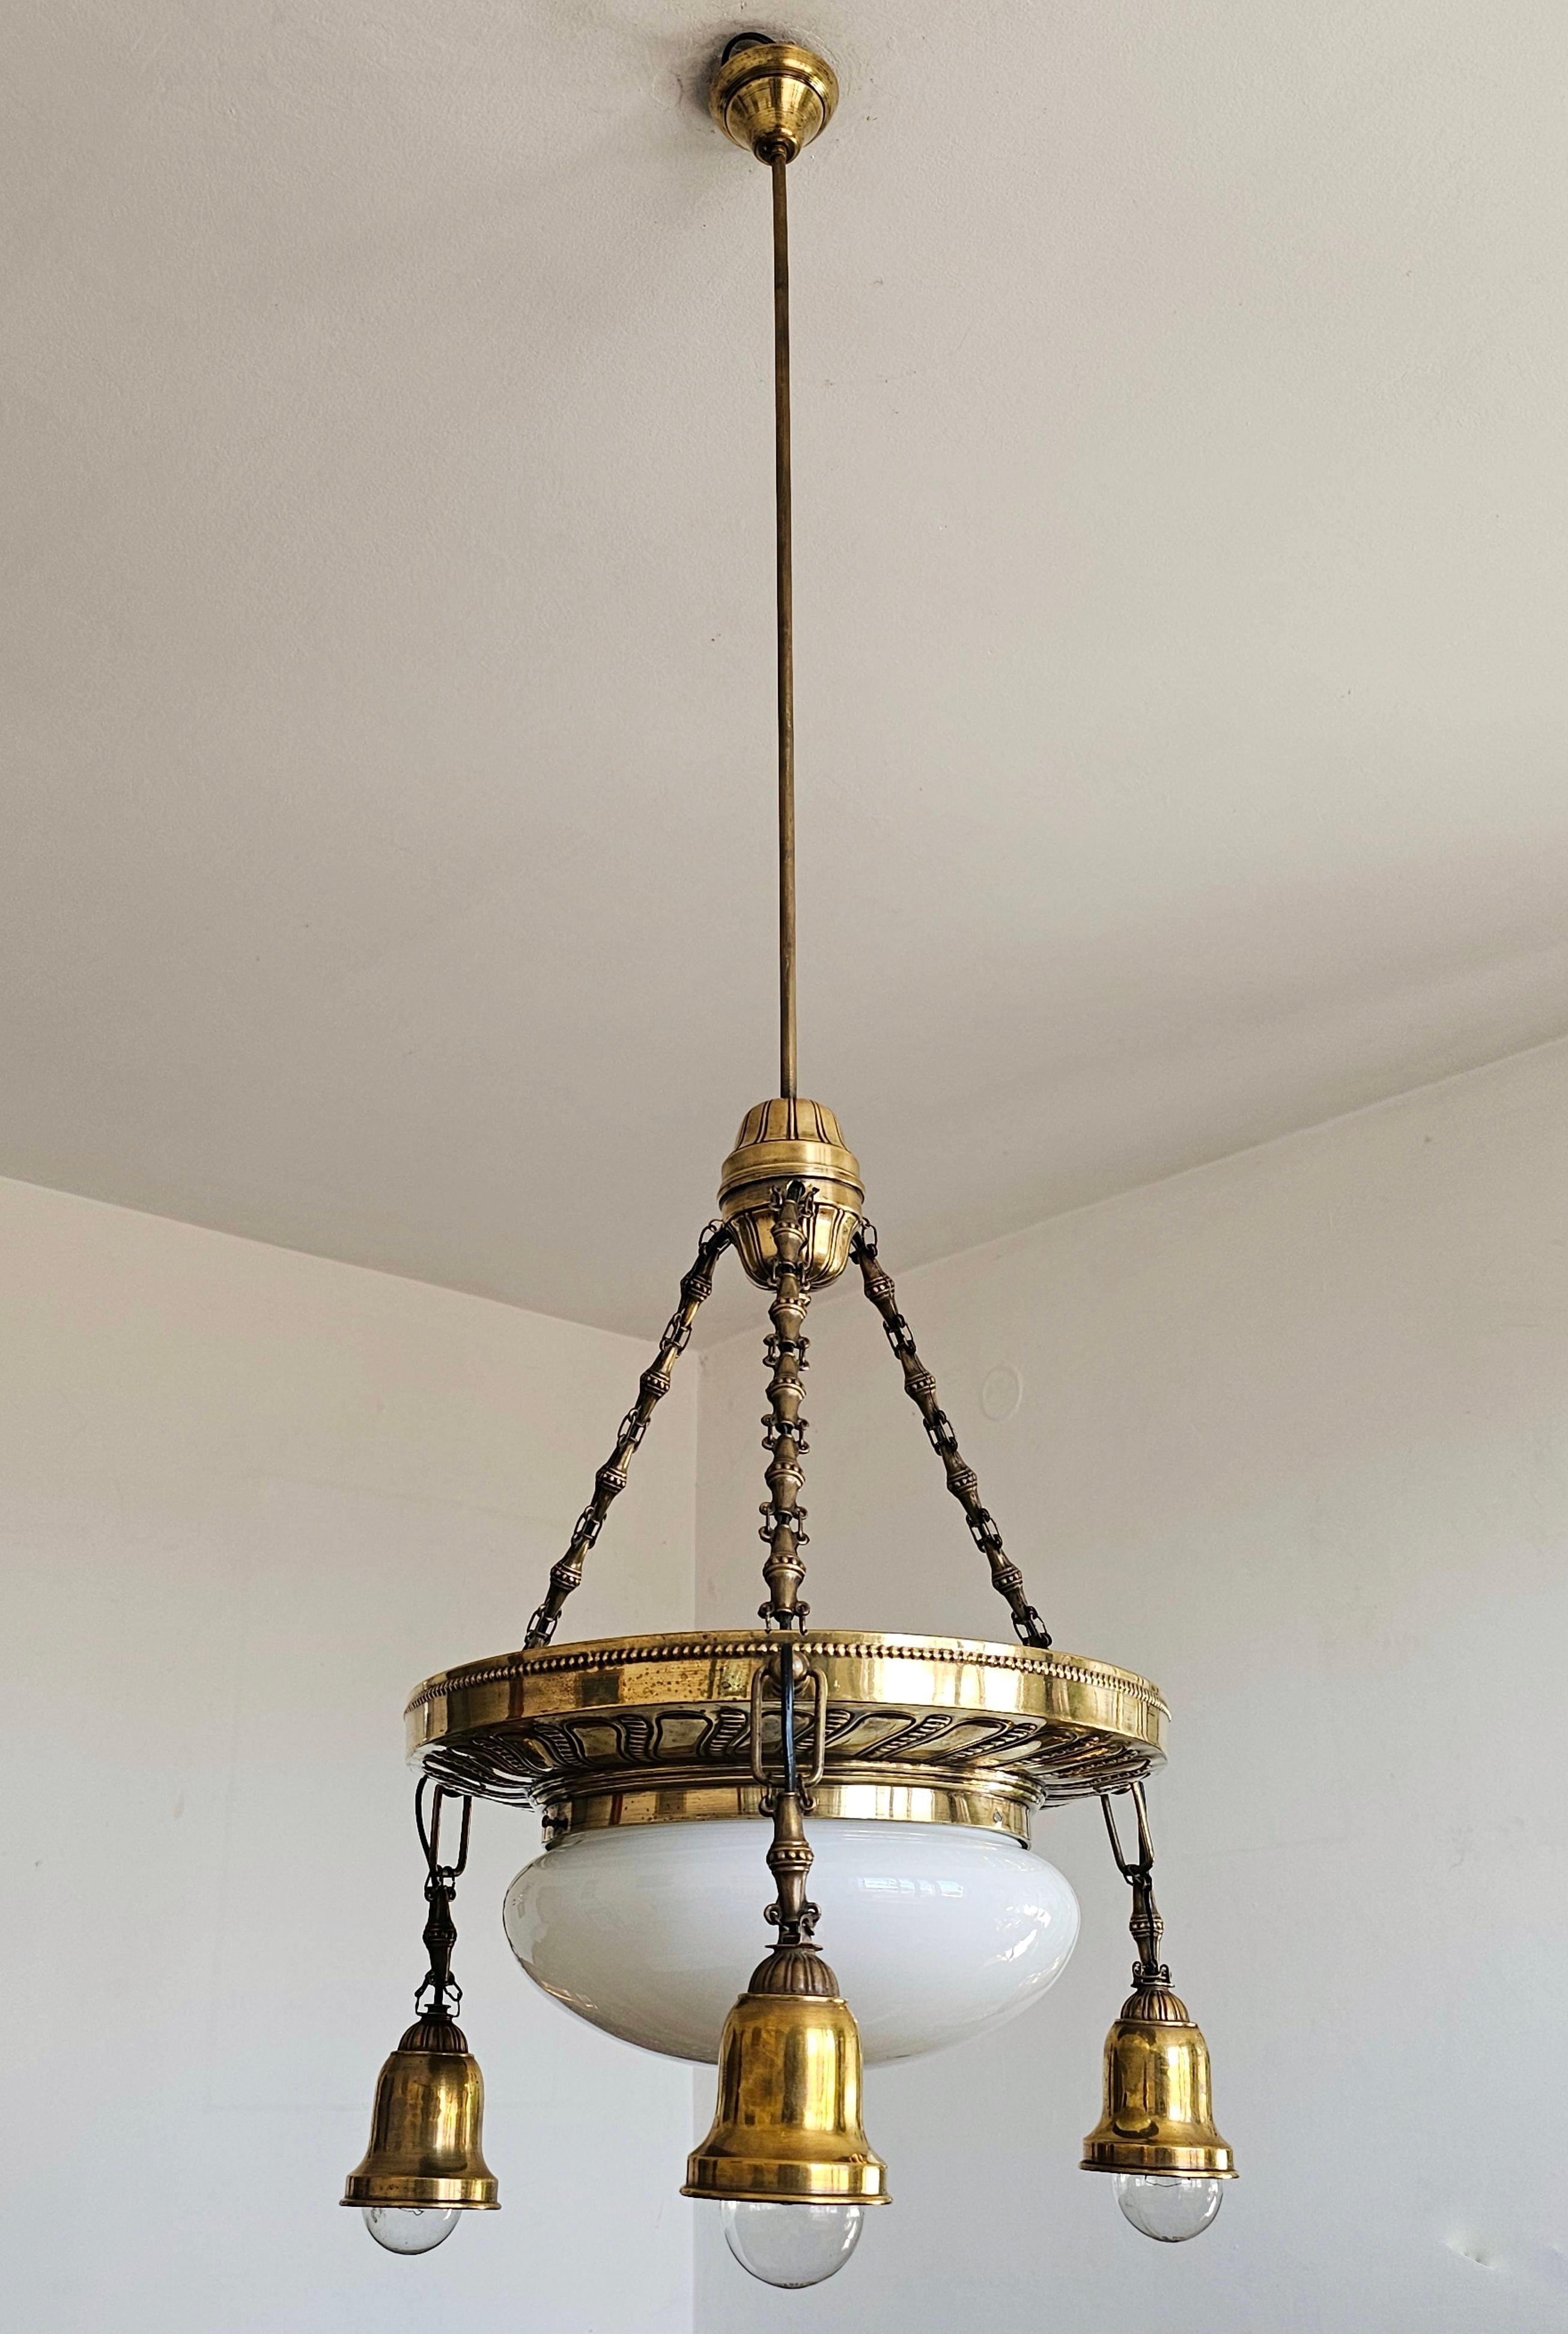 Austrian Art Nouveau Polished Brass Chandelier with Opaline glass dome, Austria 1910s For Sale